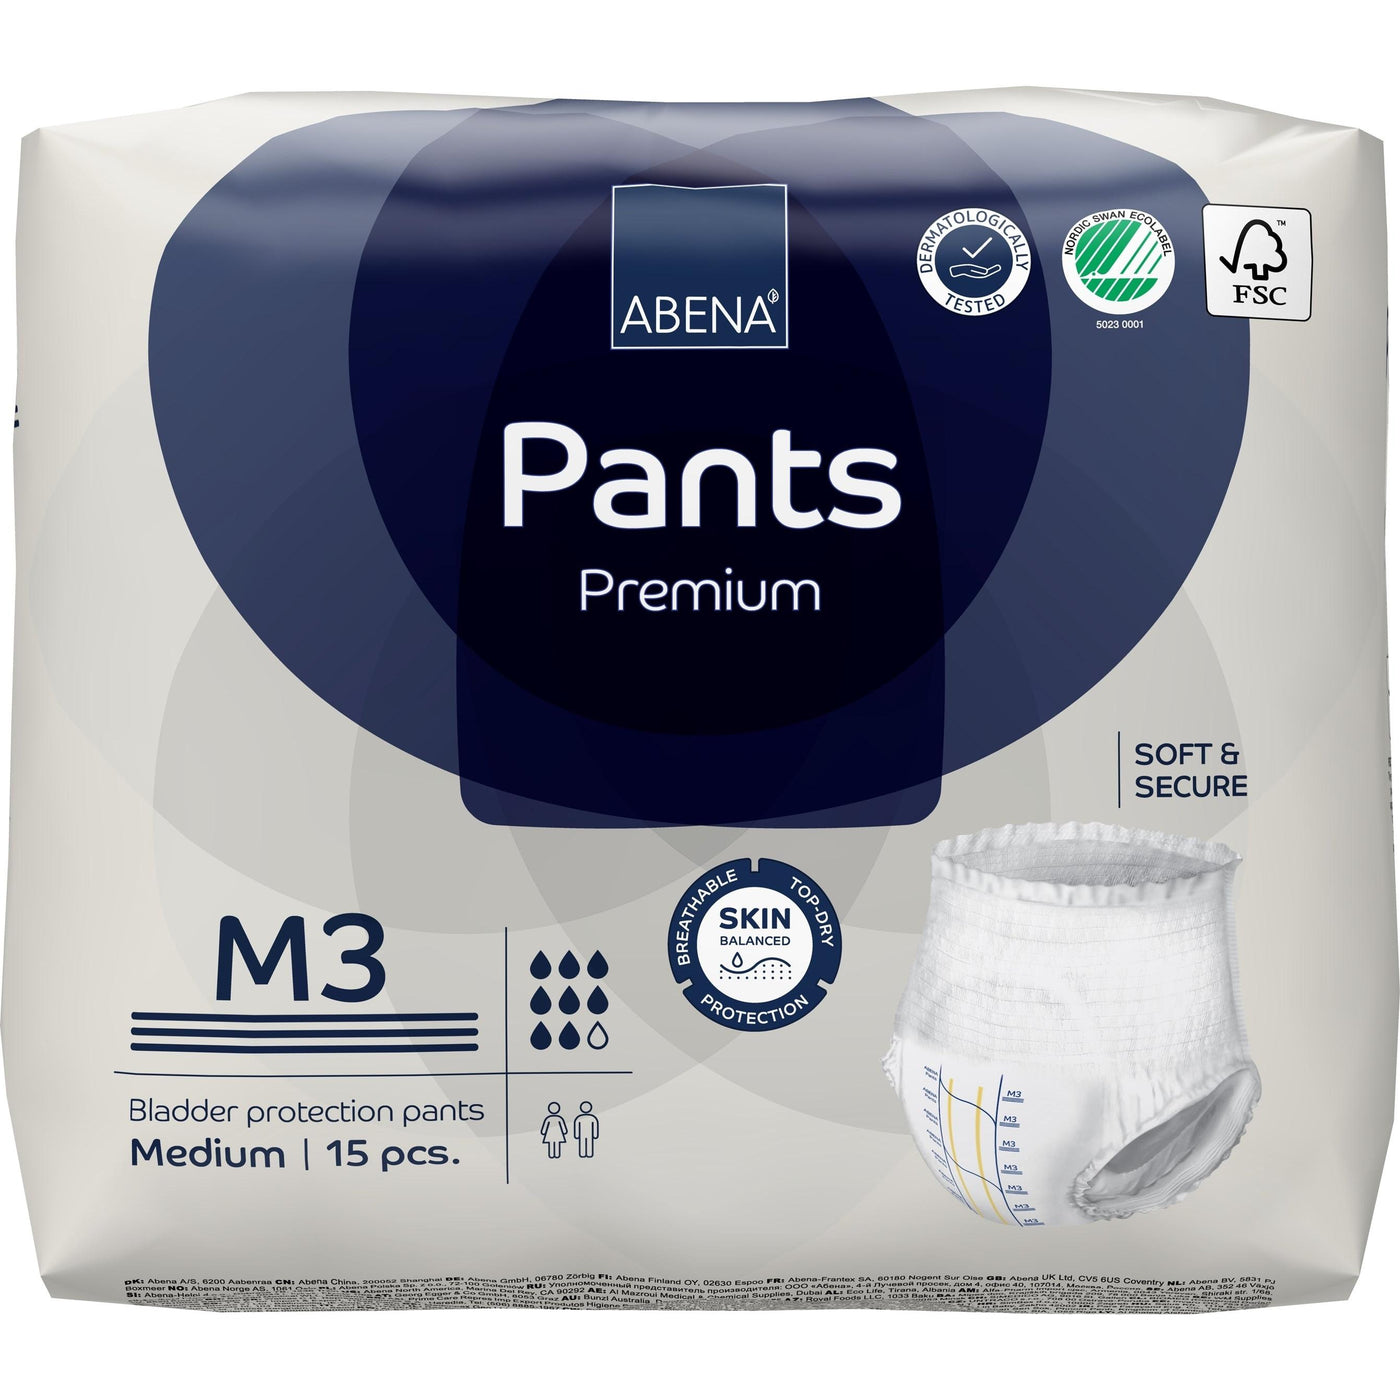 TENA Men Premium Fit Level 4 Pants - L/XL - Case Saver- 6 Packs of 8 - 48  Pants